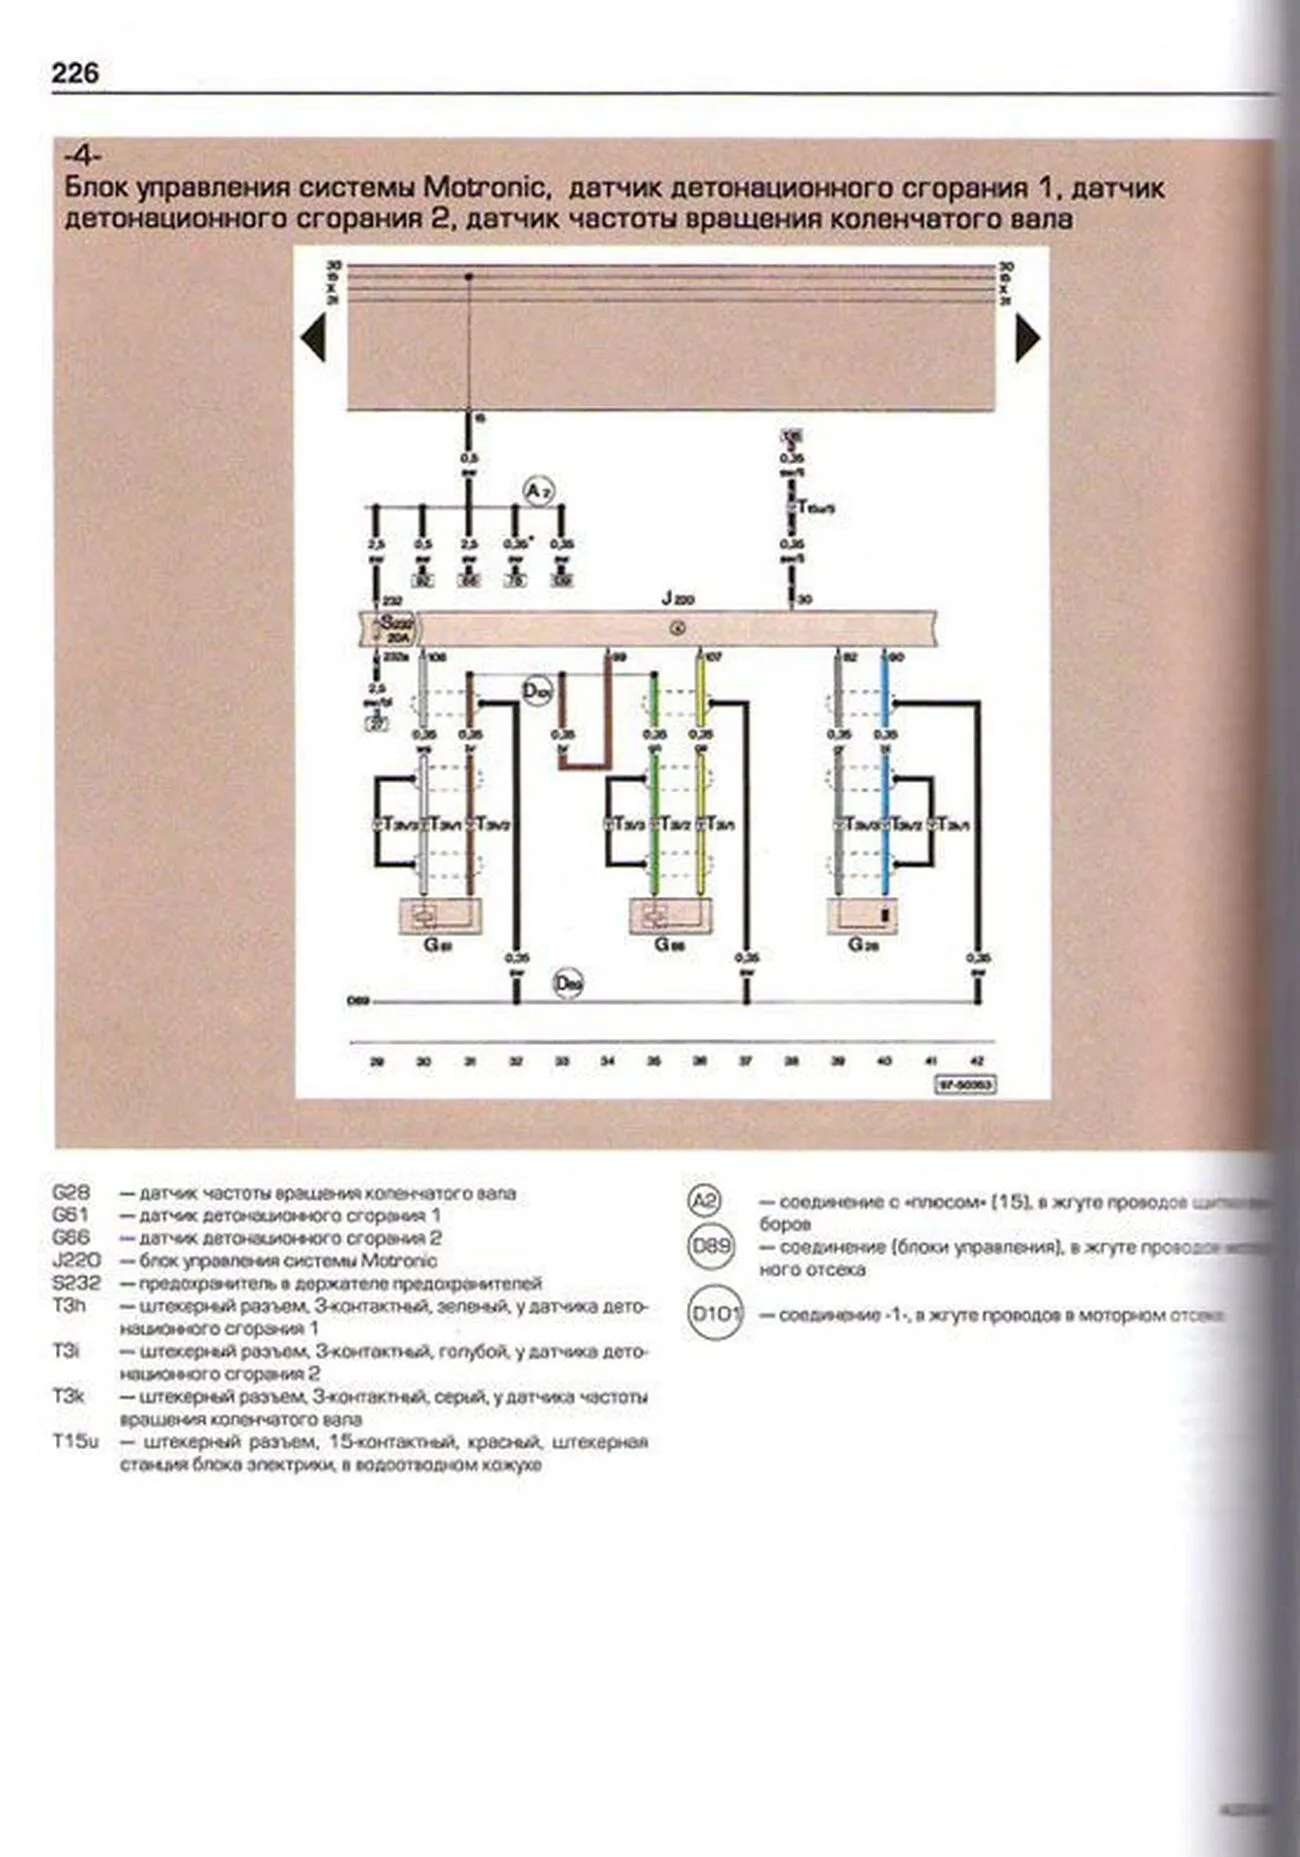 Книга: AUDI A6 (б , д) с 1997 г.в., рем., экспл., то | Алфамер Паблишинг